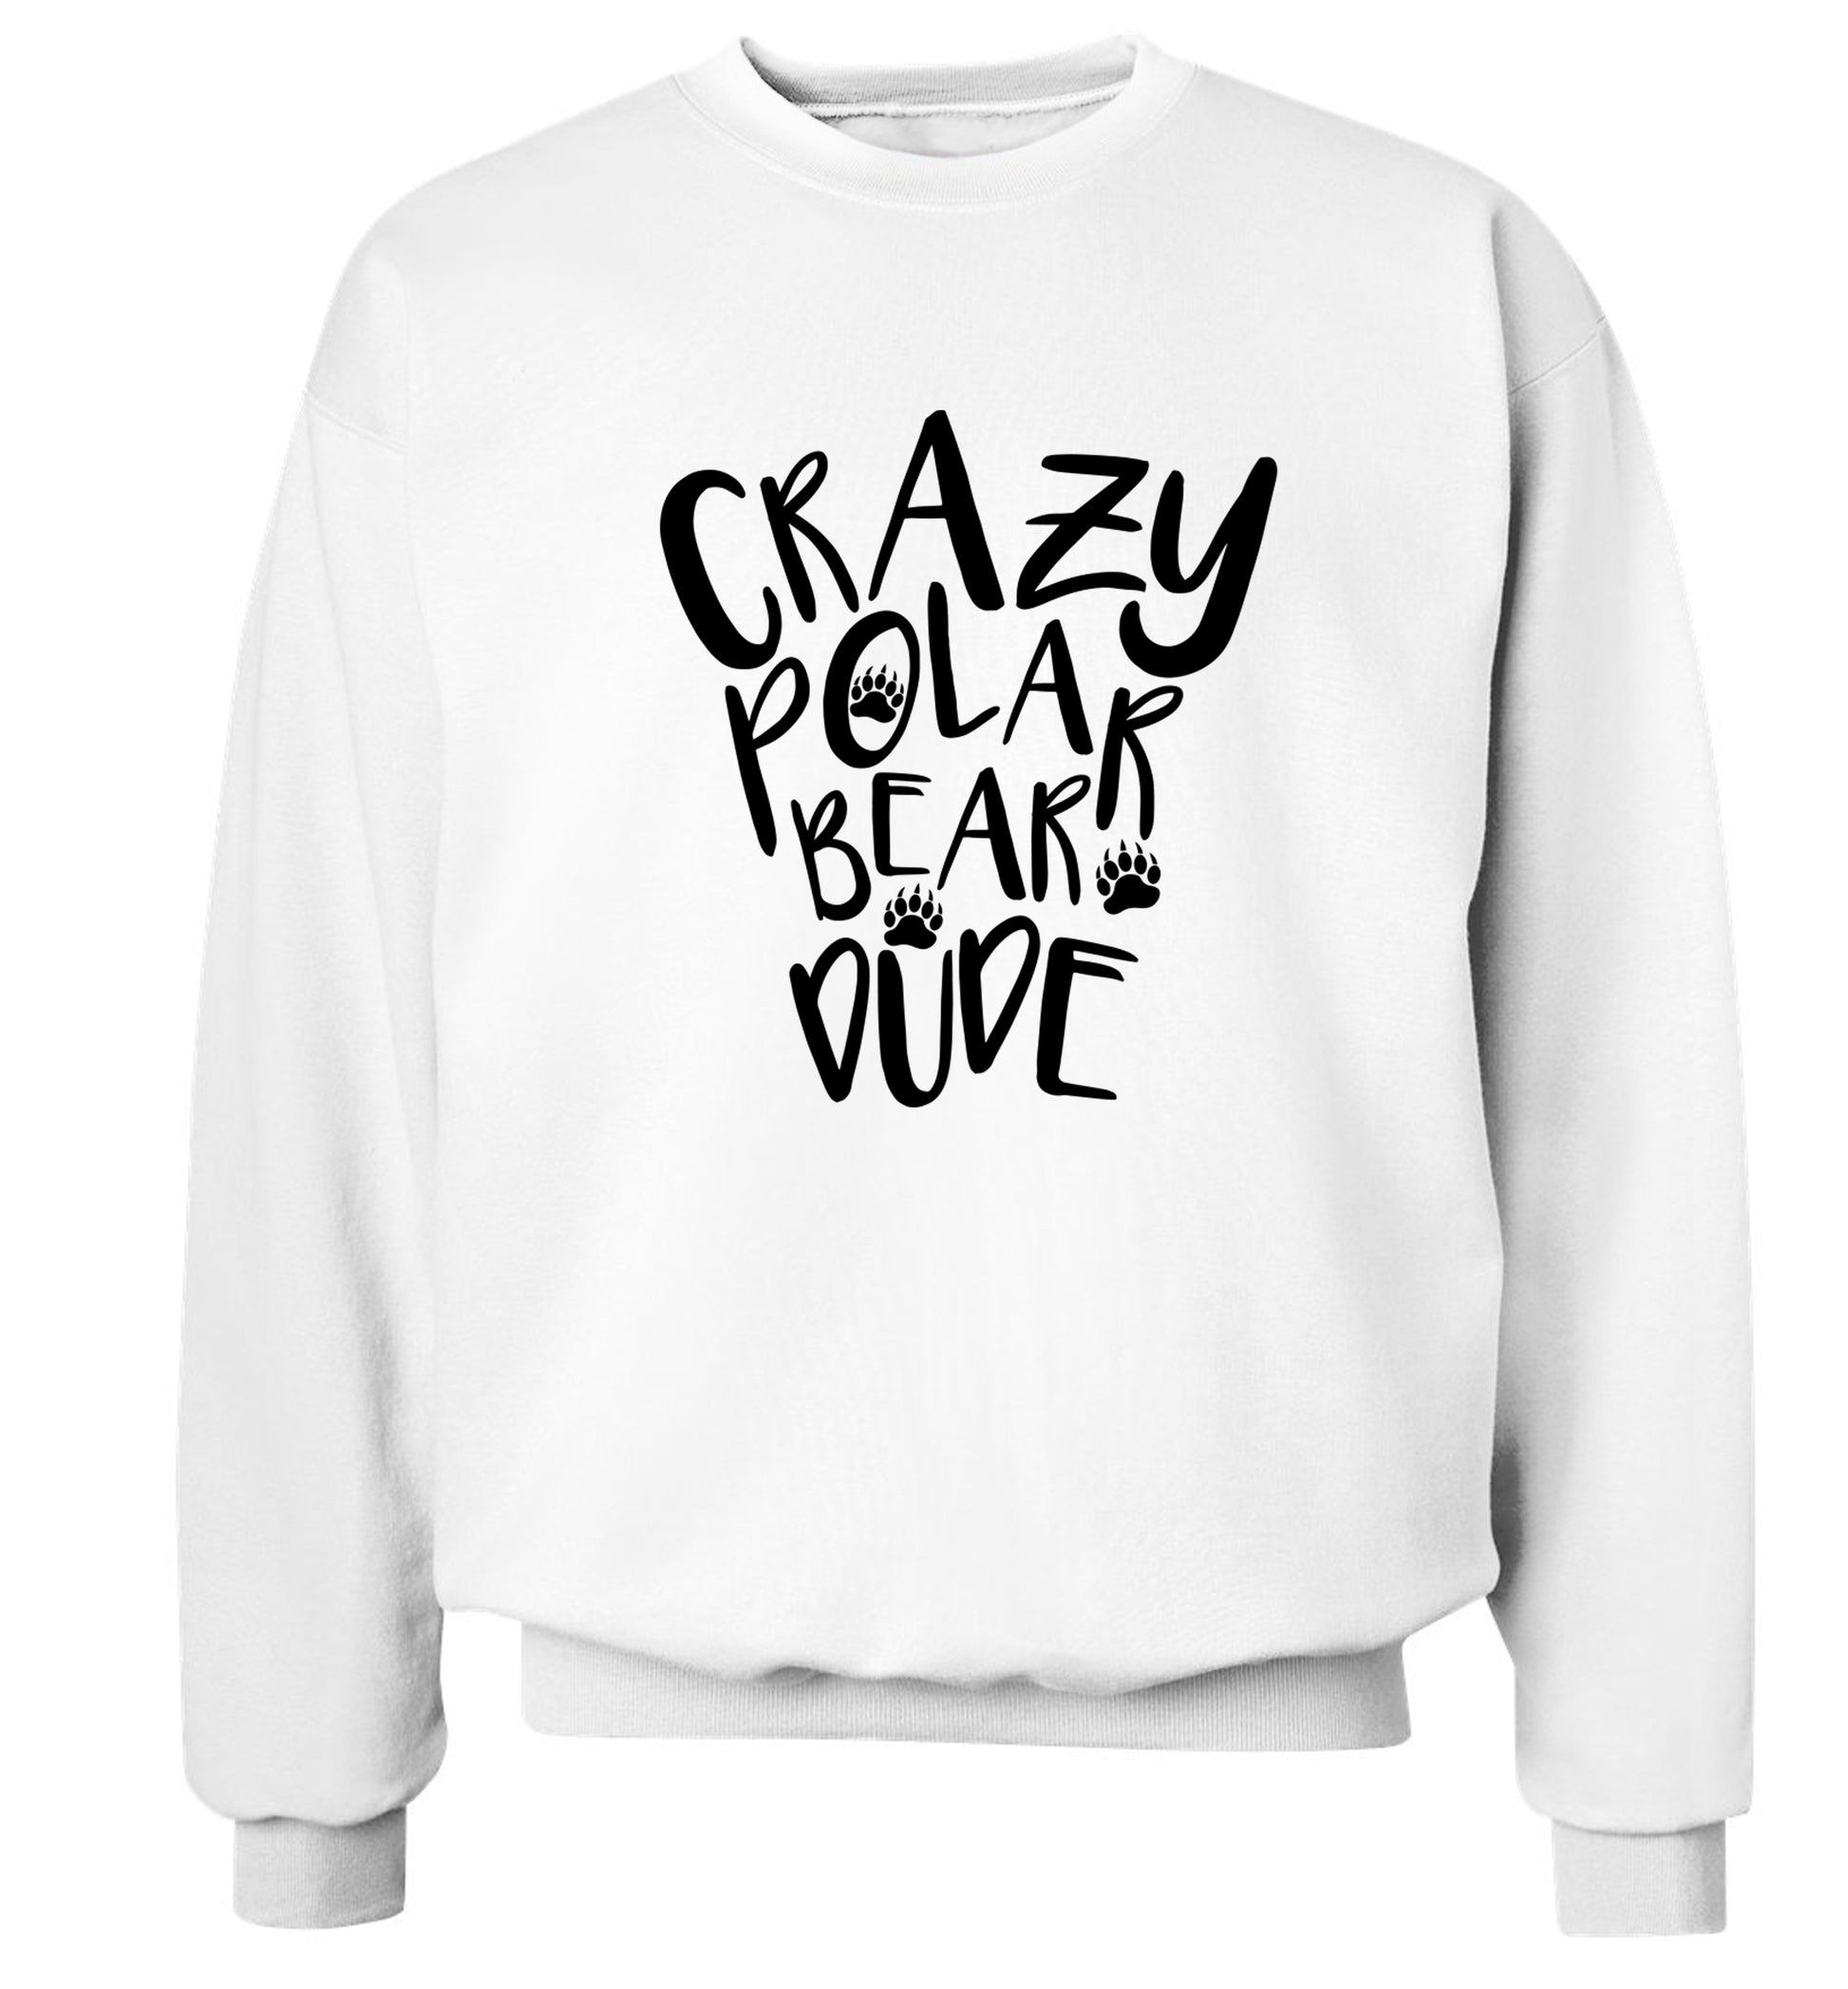 Crazy polar bear dude Adult's unisex white Sweater 2XL